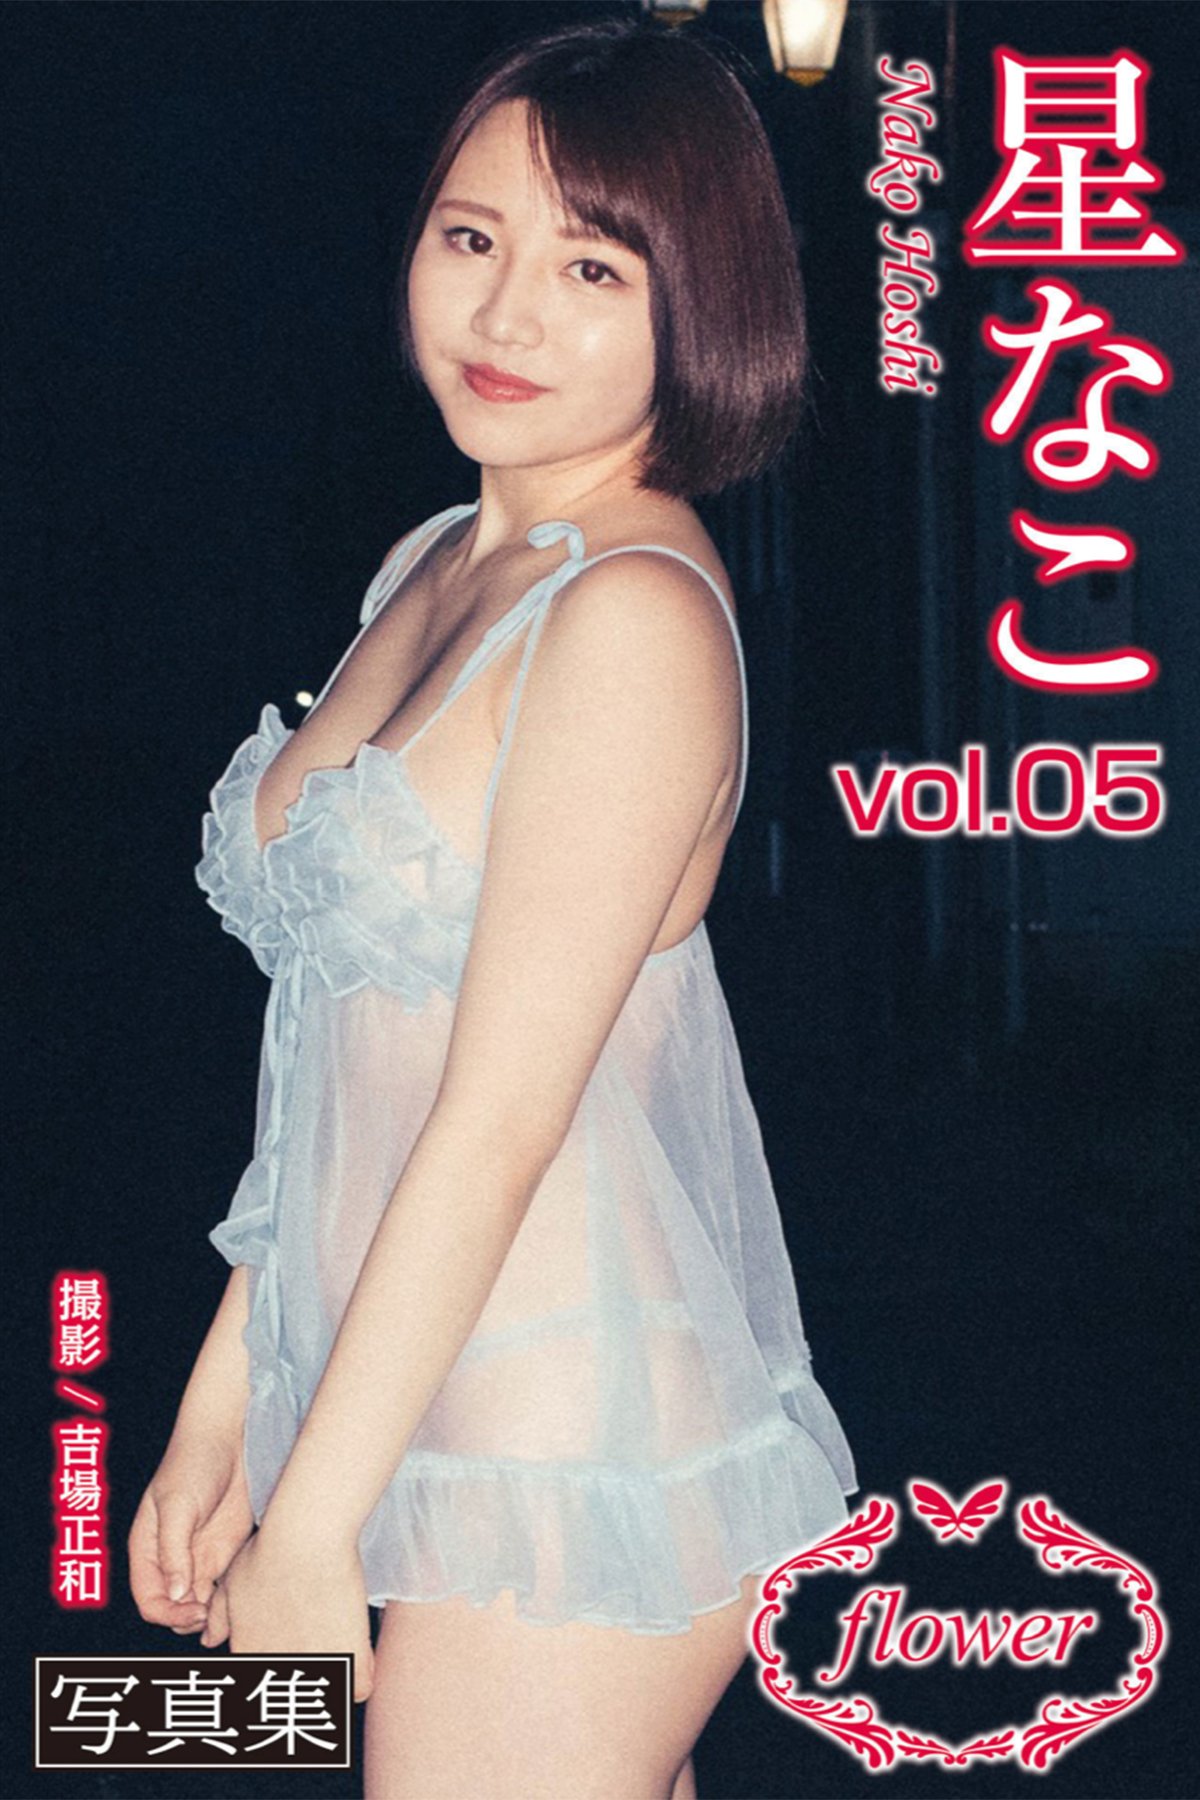 FLOWER Nako Hoshi 星なこ Vol.05